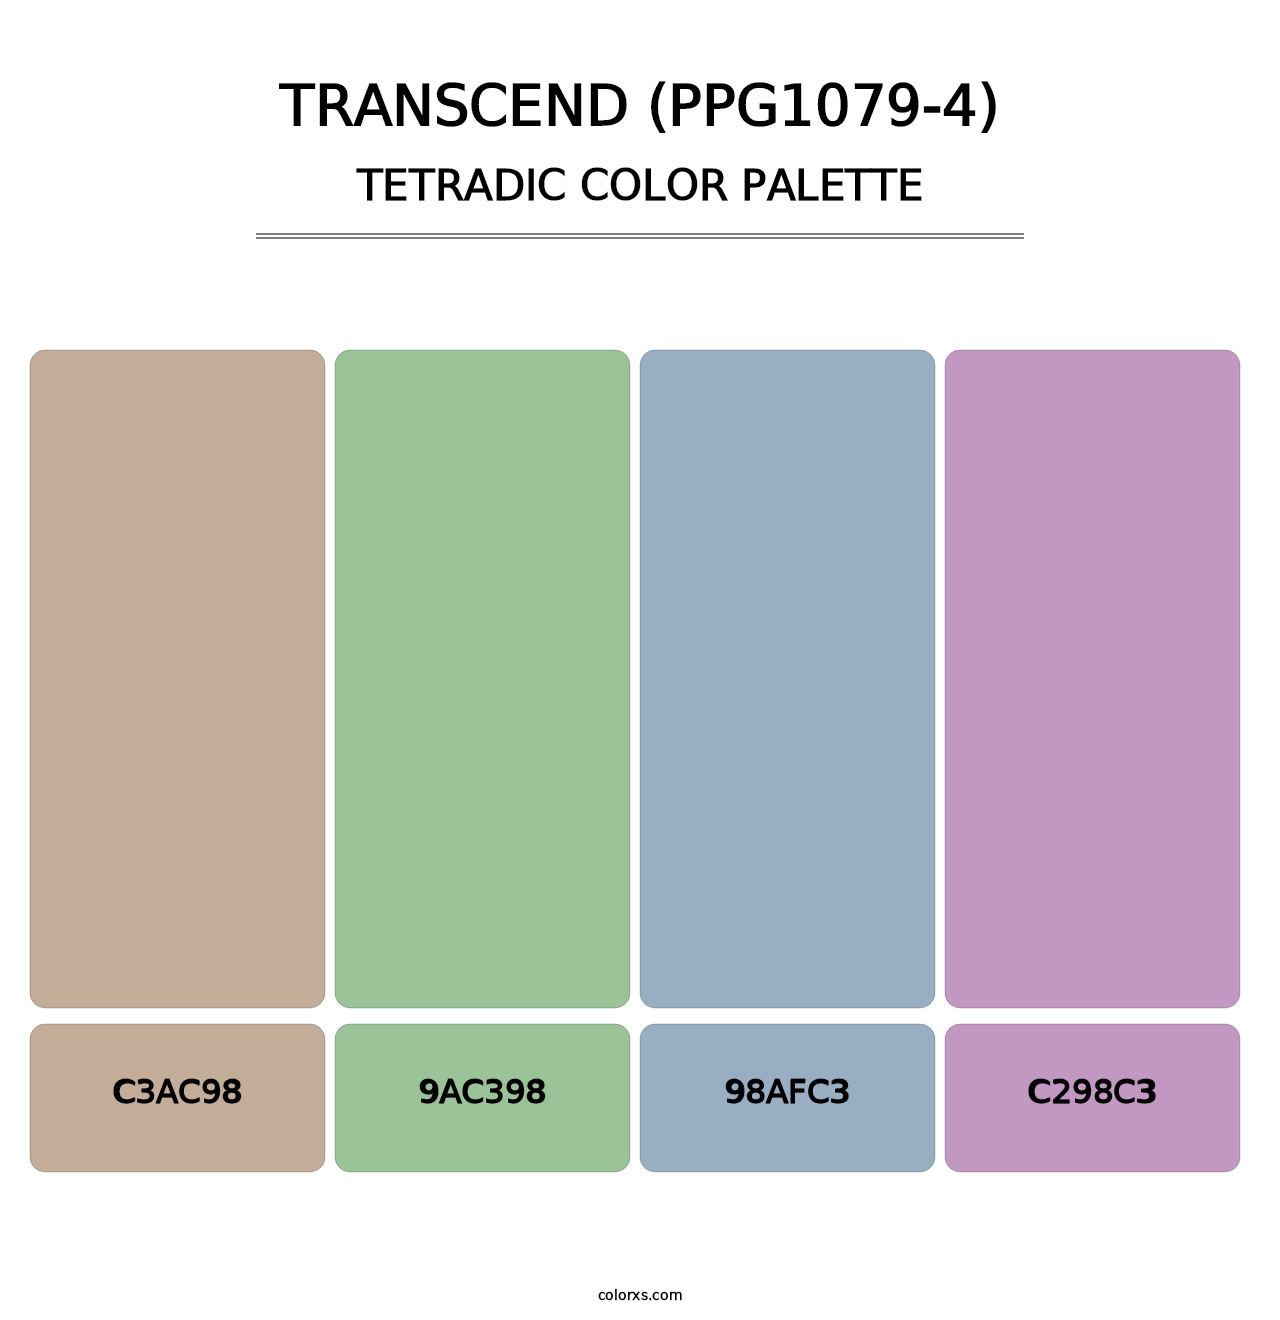 Transcend (PPG1079-4) - Tetradic Color Palette